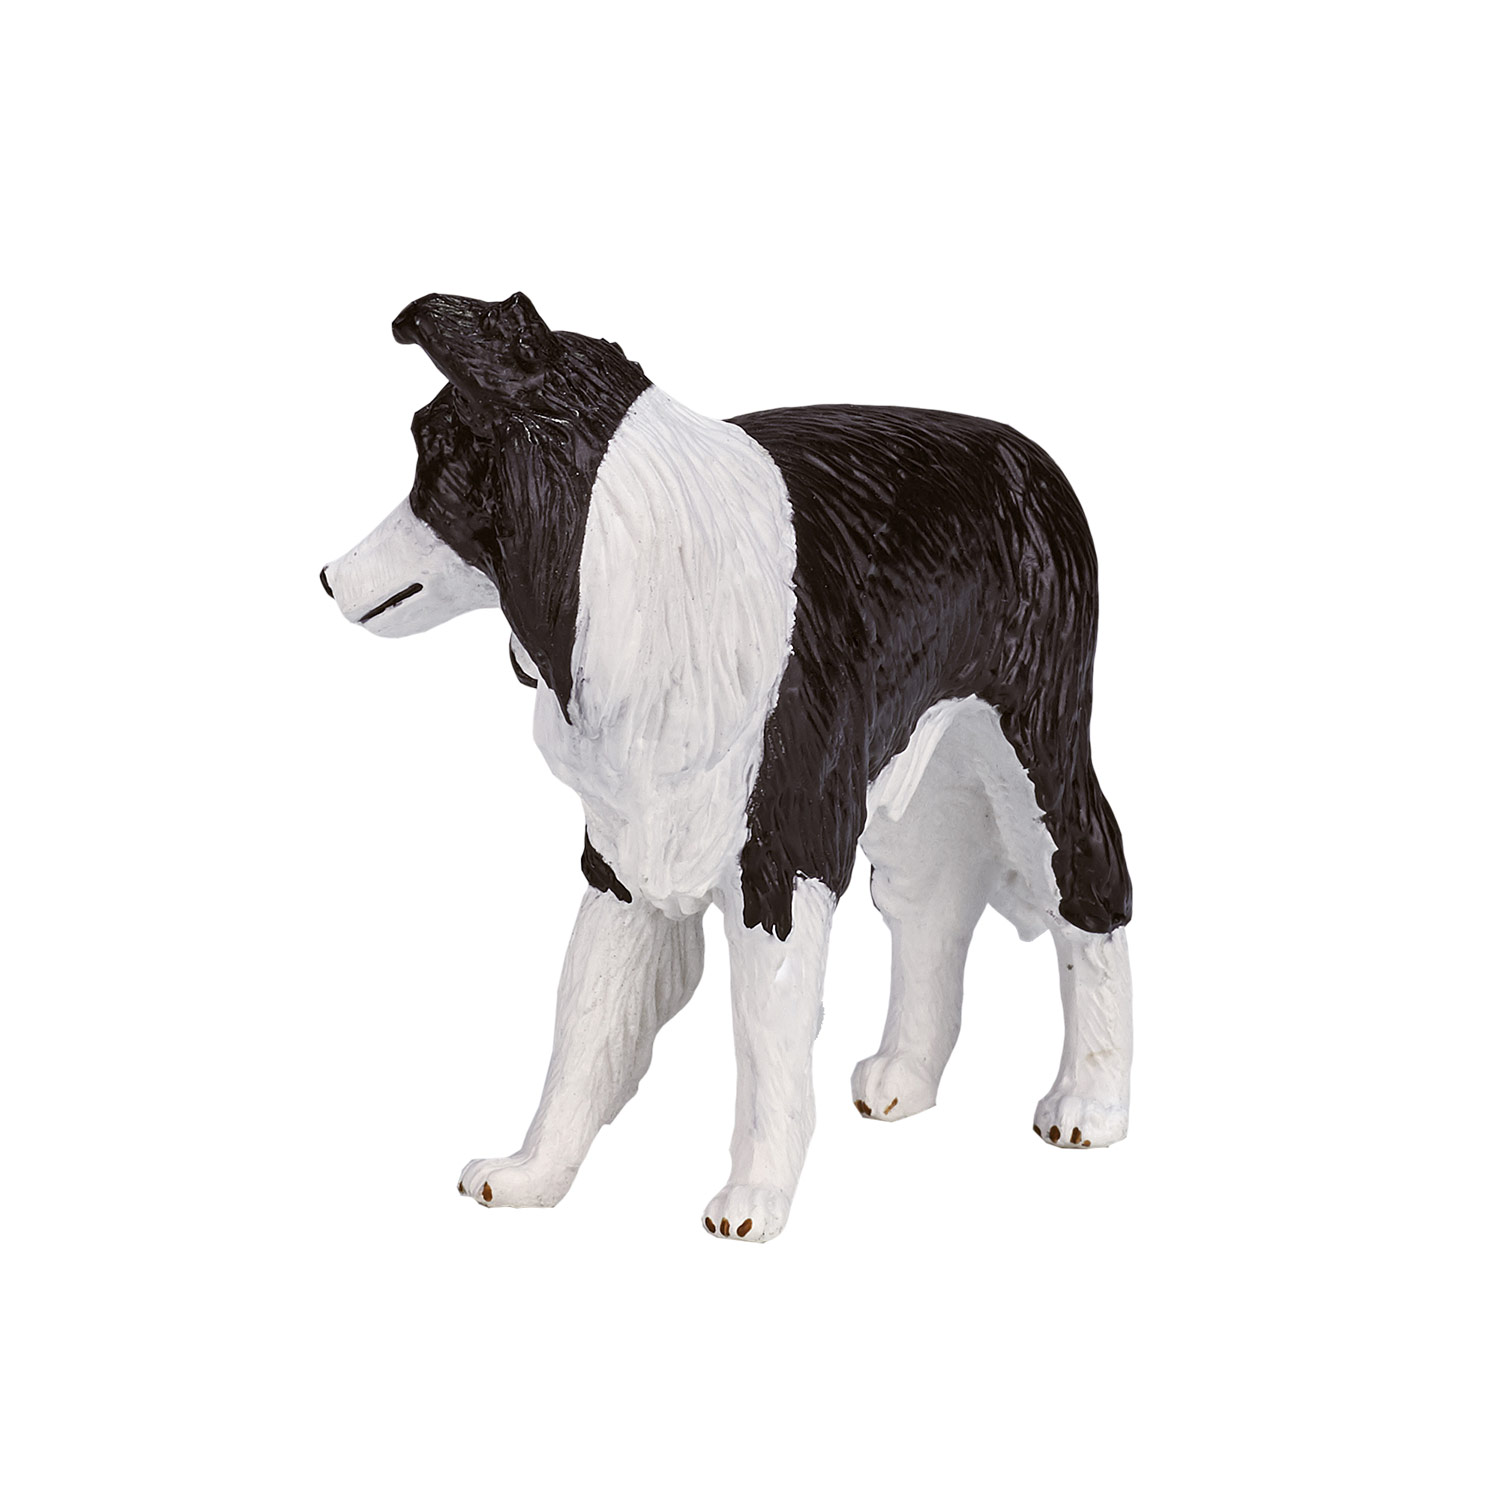 MOJO Border Collie Dog Animal Figure 387203 NEW IN STOCK Toys